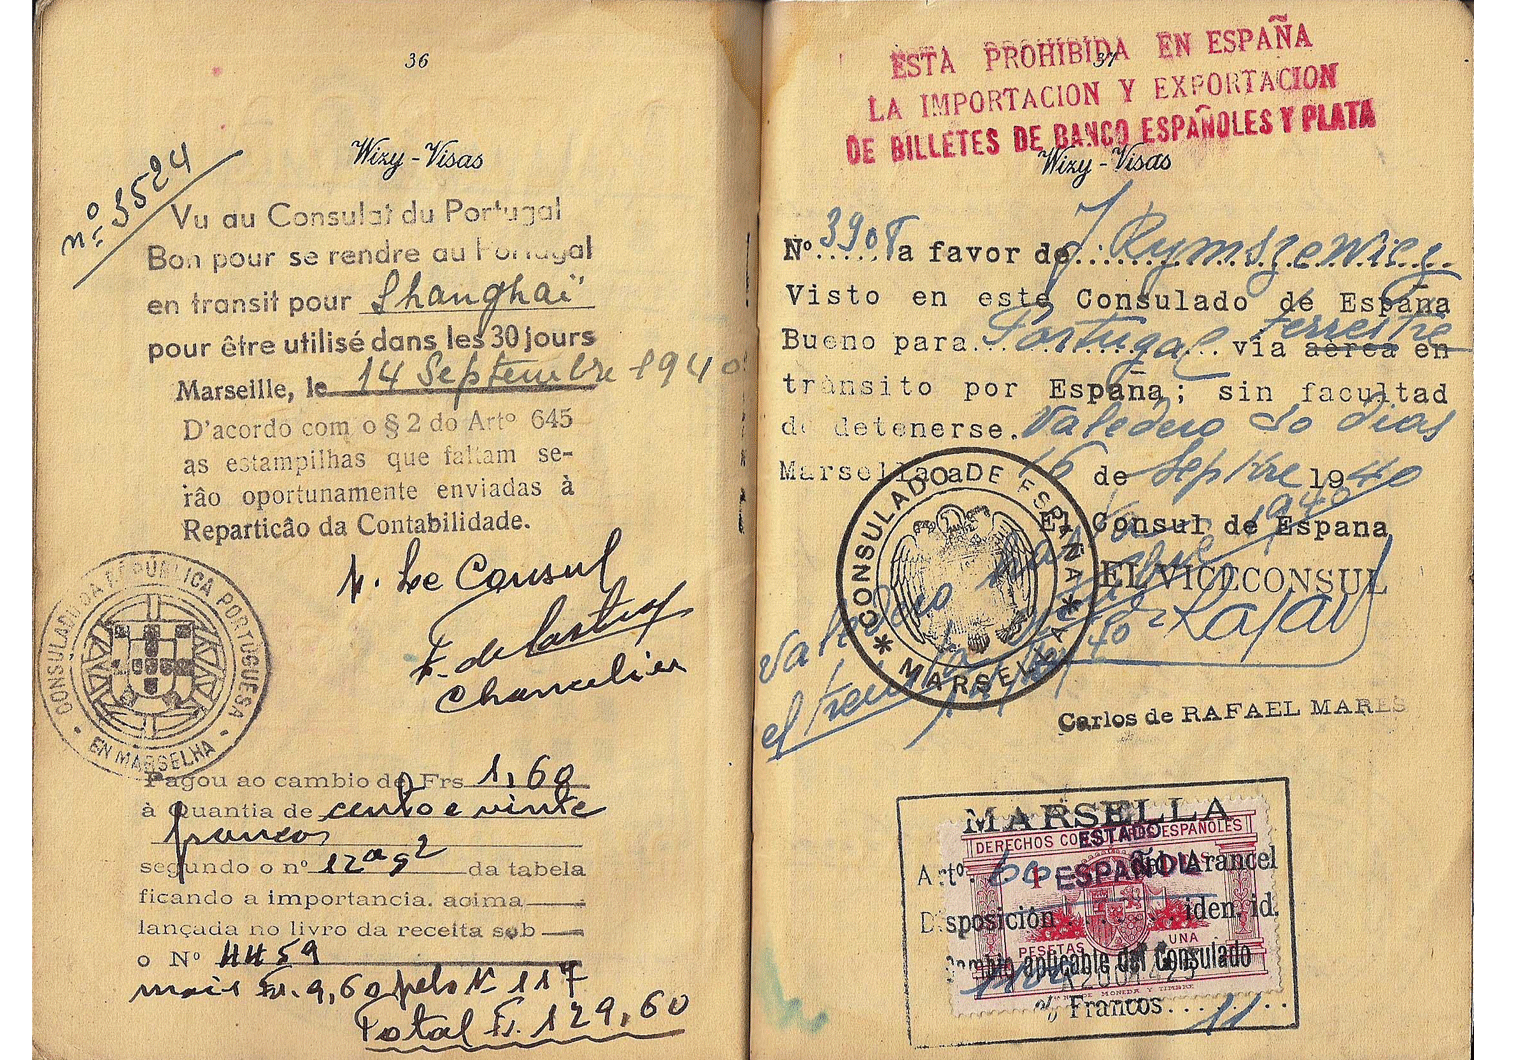 War time used Polish passport